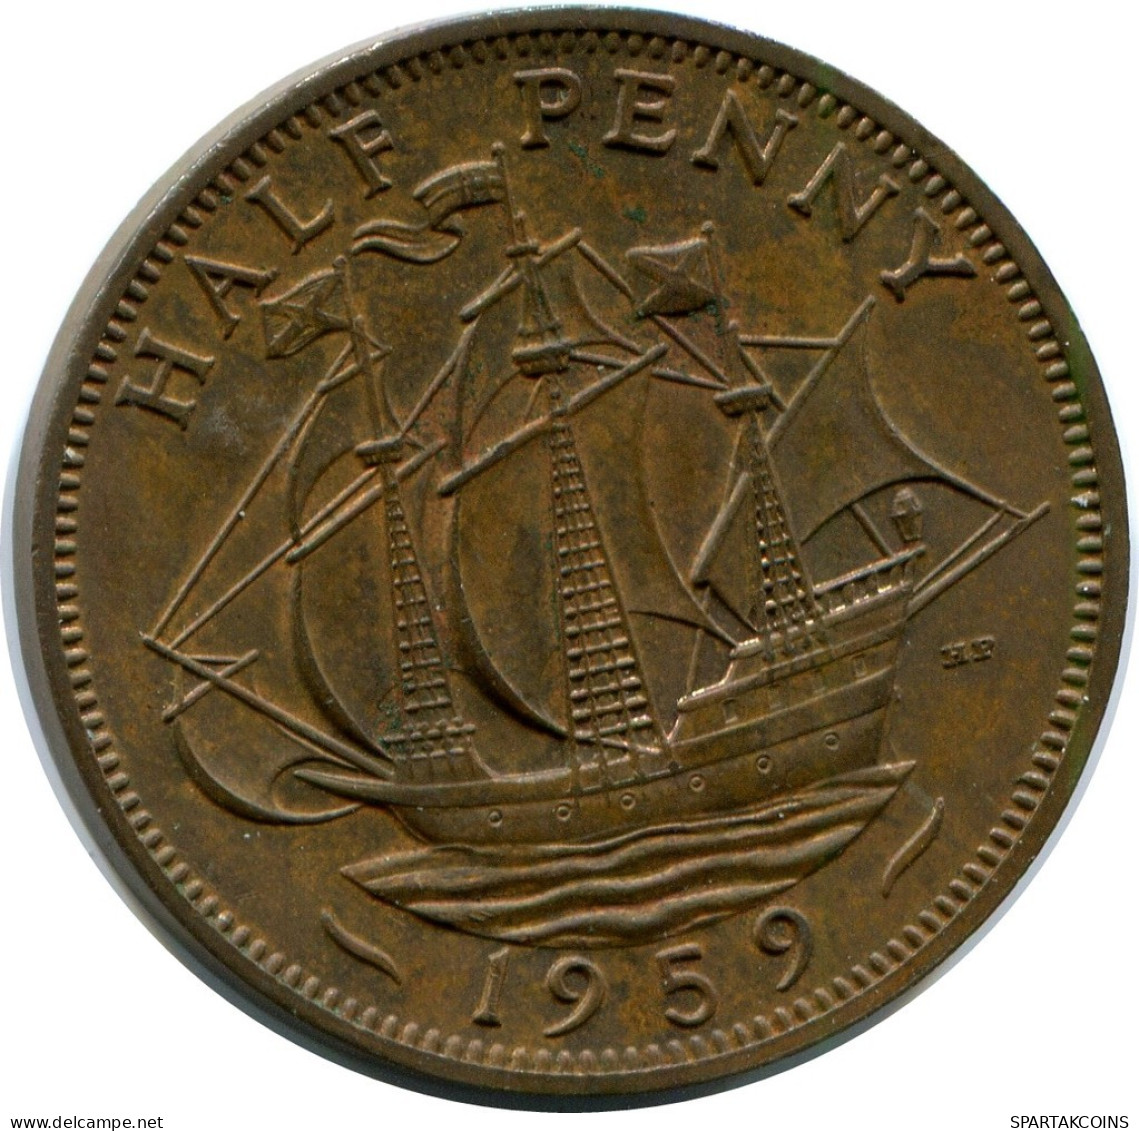 HALF PENNY 1959 UK GROßBRITANNIEN GREAT BRITAIN Münze #BA989.D.A - C. 1/2 Penny